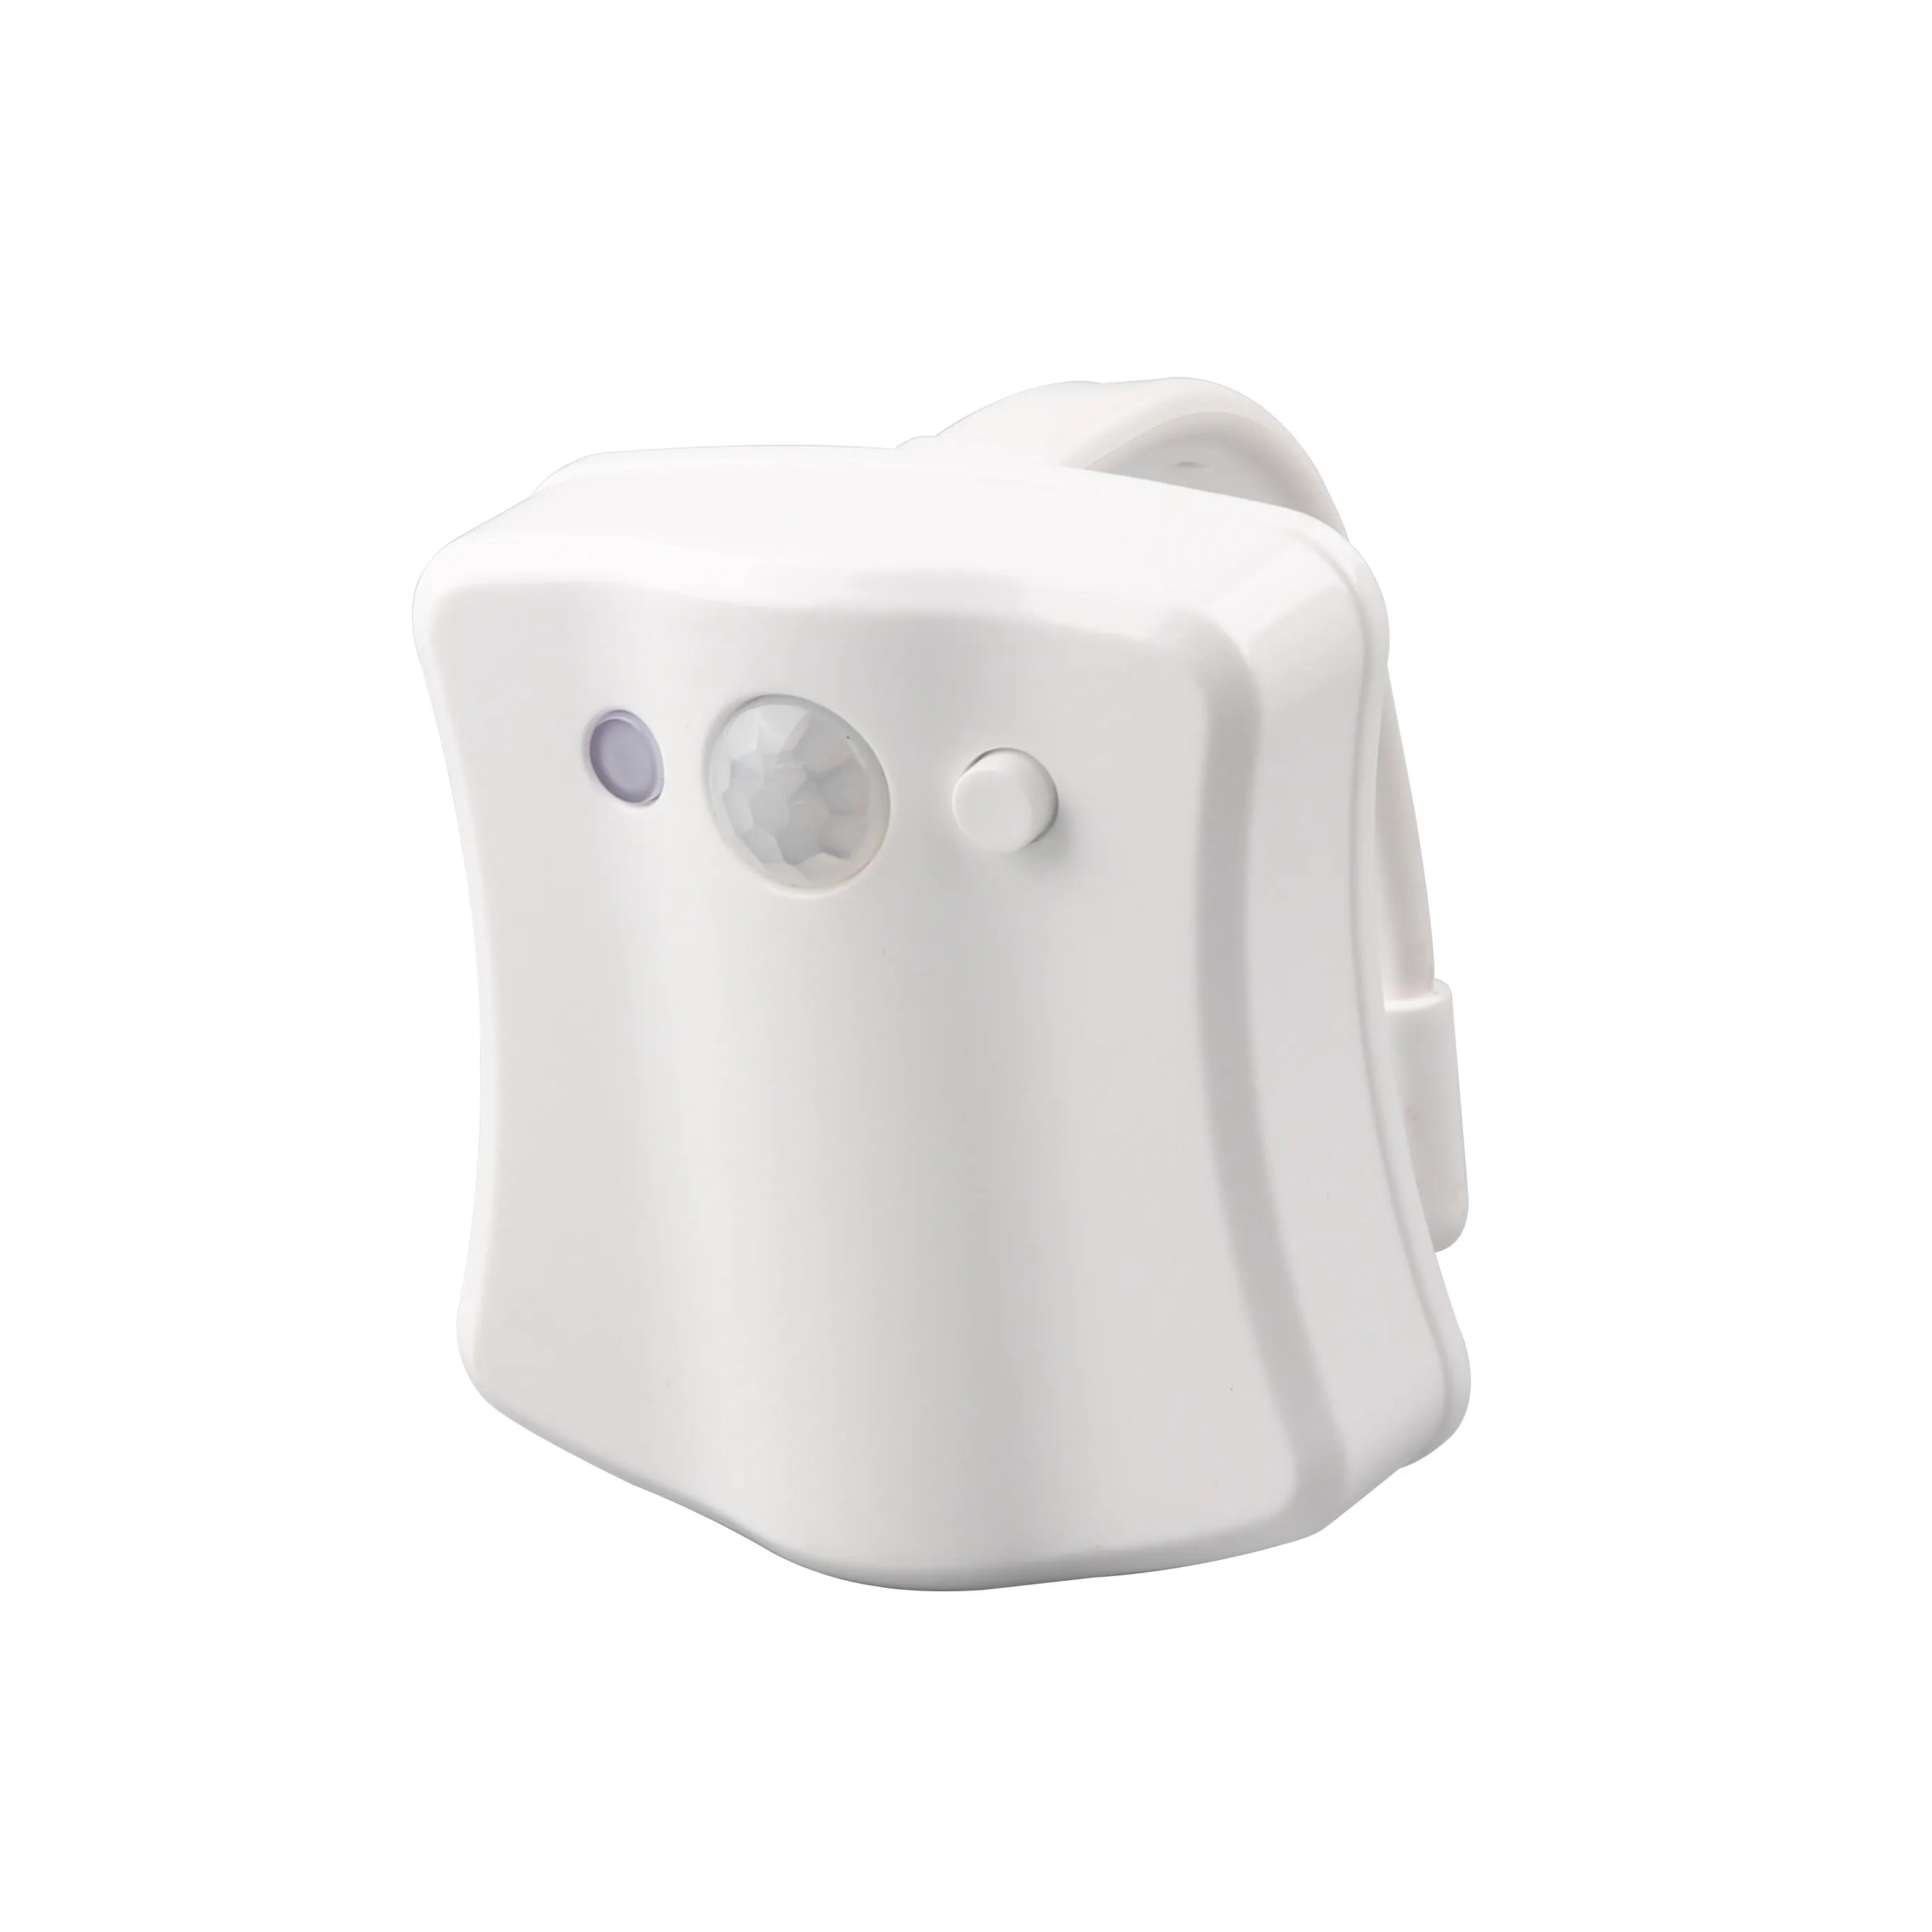 Motion Sensor Toilet Light High Quality Motion Sensor Toilet Night Light Home Bathroom Toilet Seat 8 Color